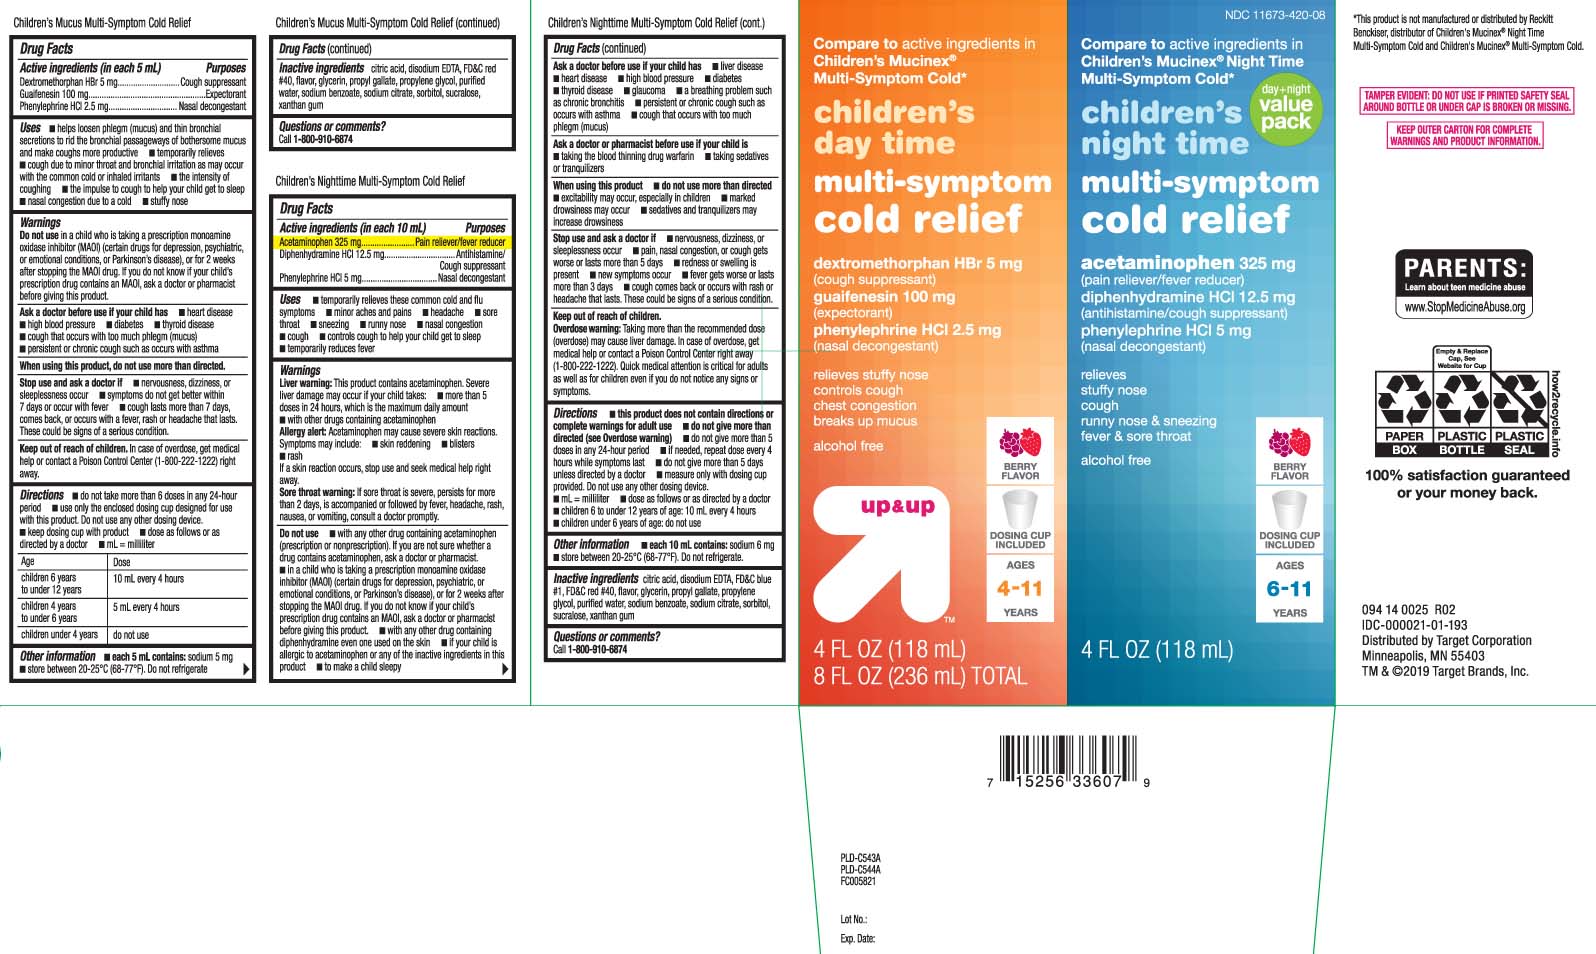 Dextromethorphan HBr 5 mg, Guaifenesin 100 mg, Phenylephrine HCl 2.5 mg, Acetaminophen 325 mg, Diphenhydramine HCl 12.5 mg Phenylephrine HCl 5 mg